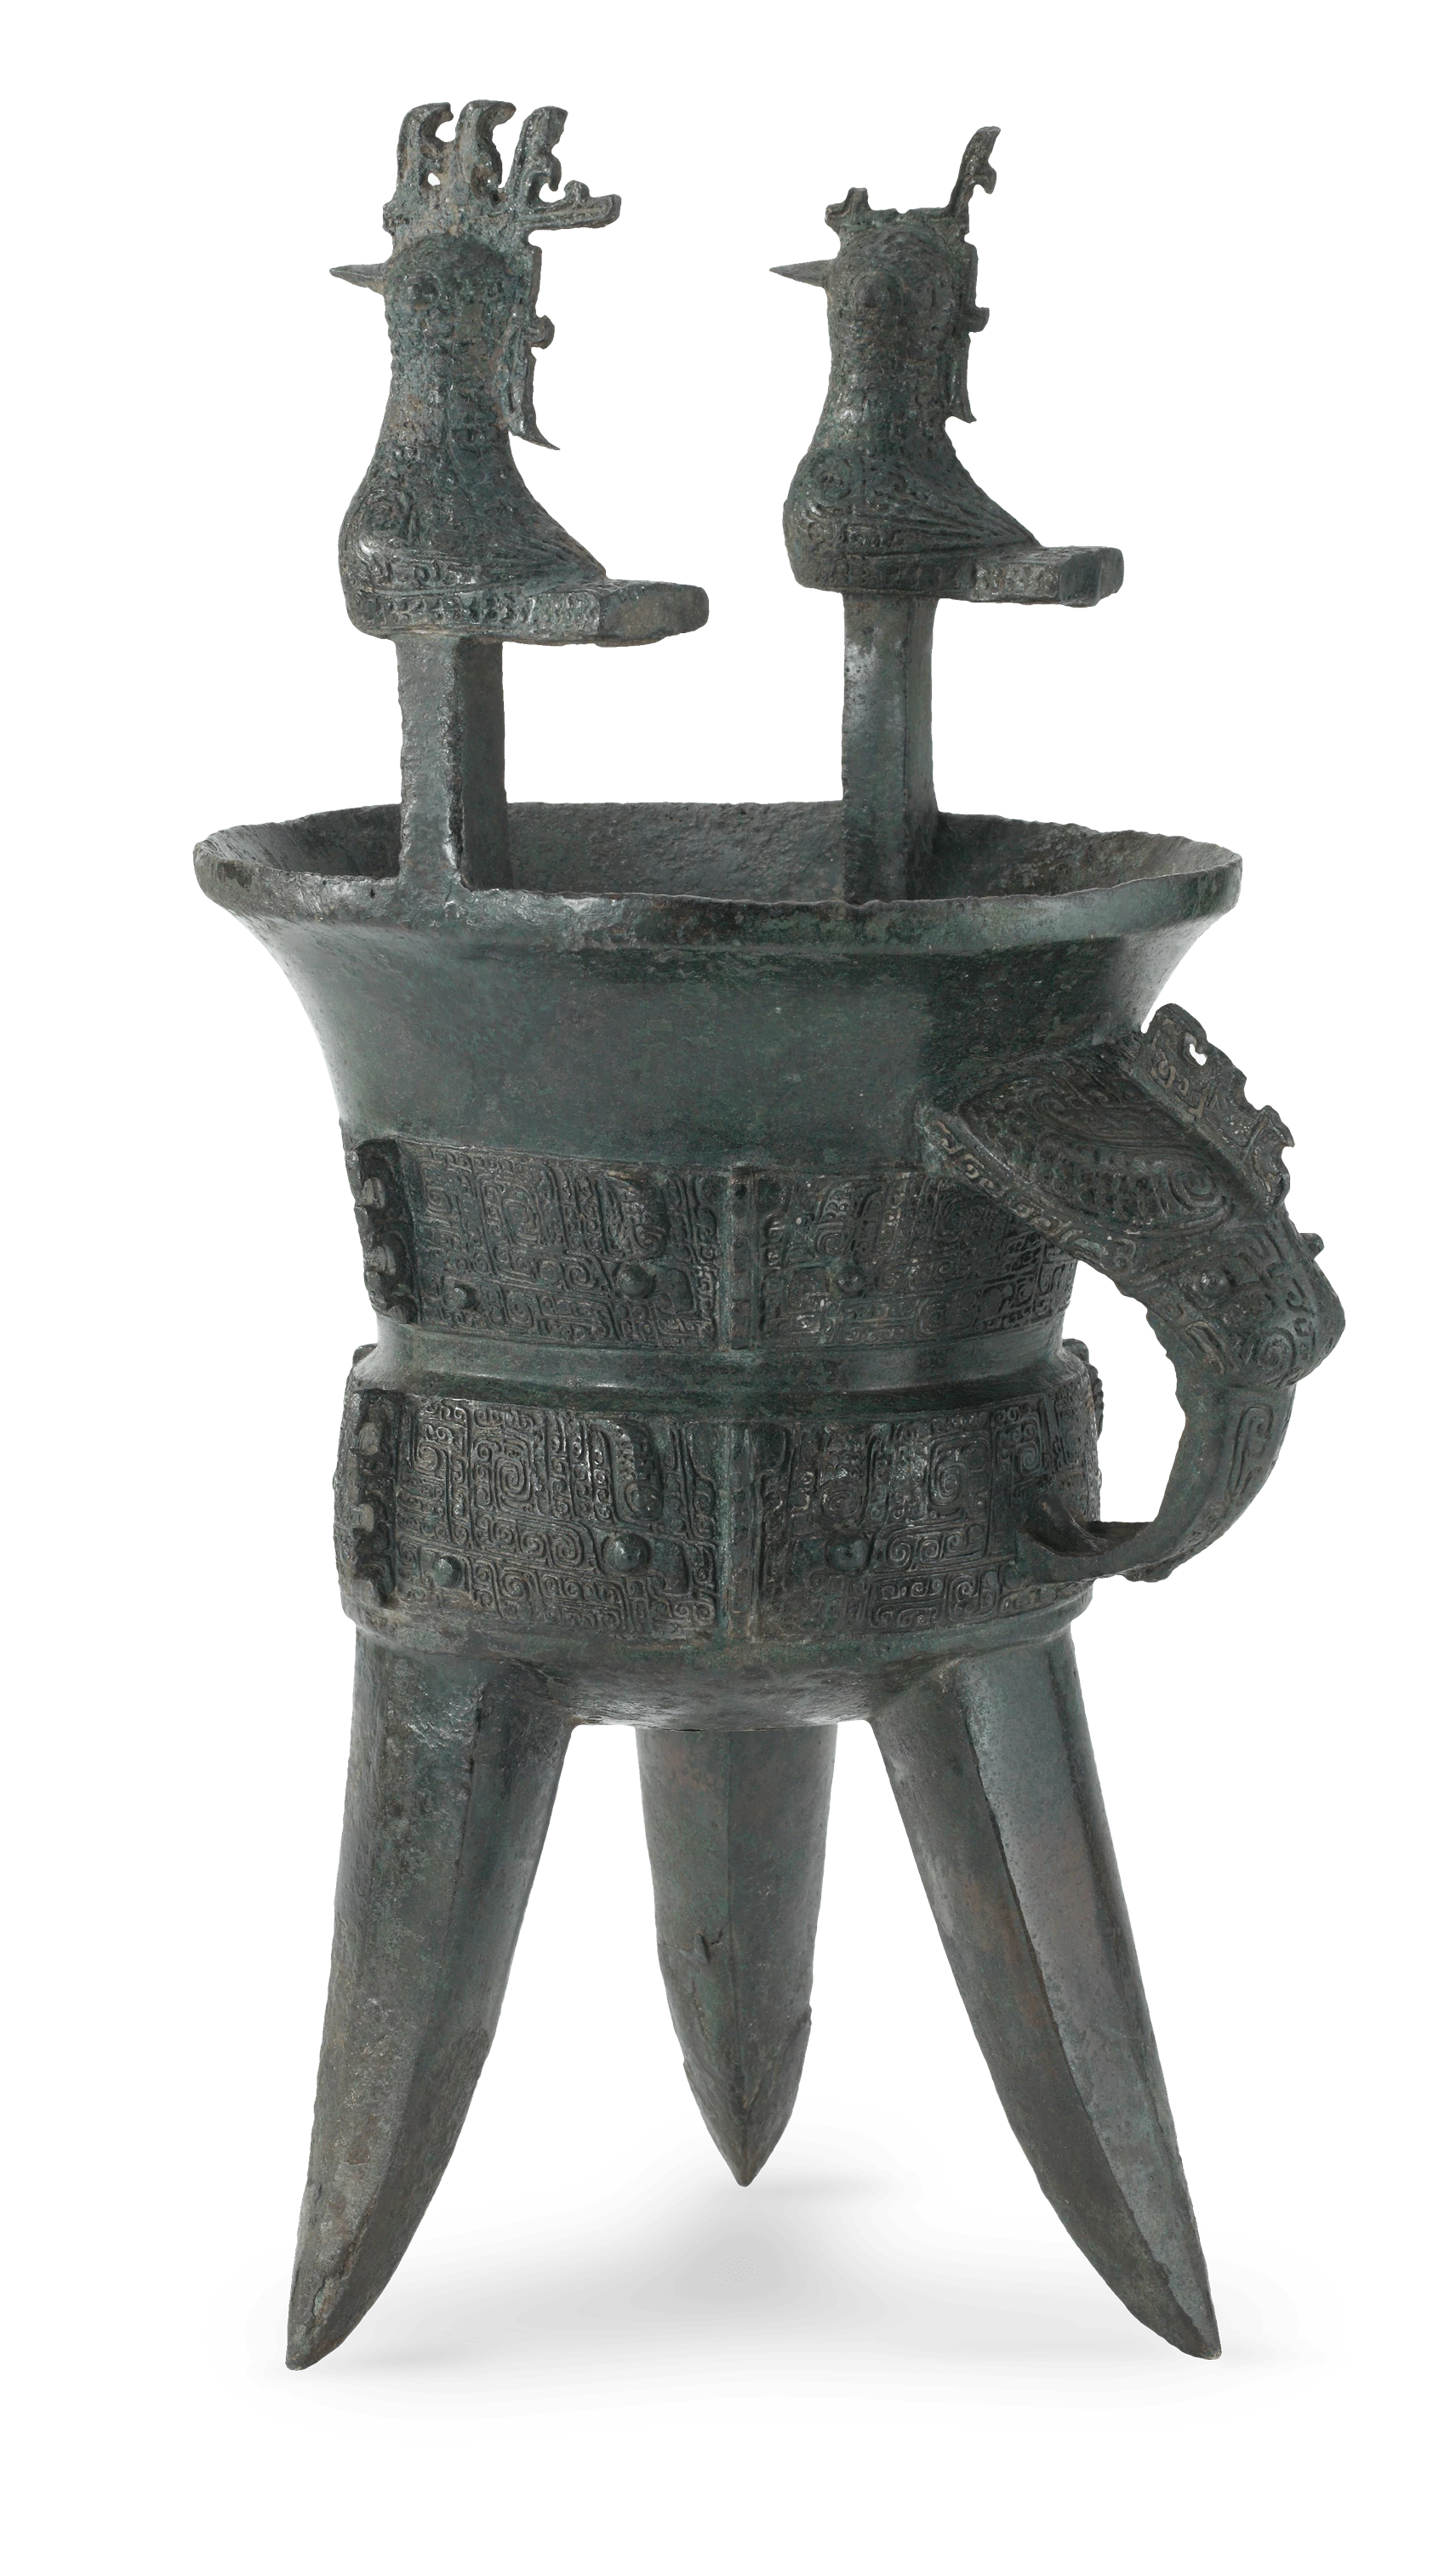 Ritual wine warmer (Jia), Ancient China